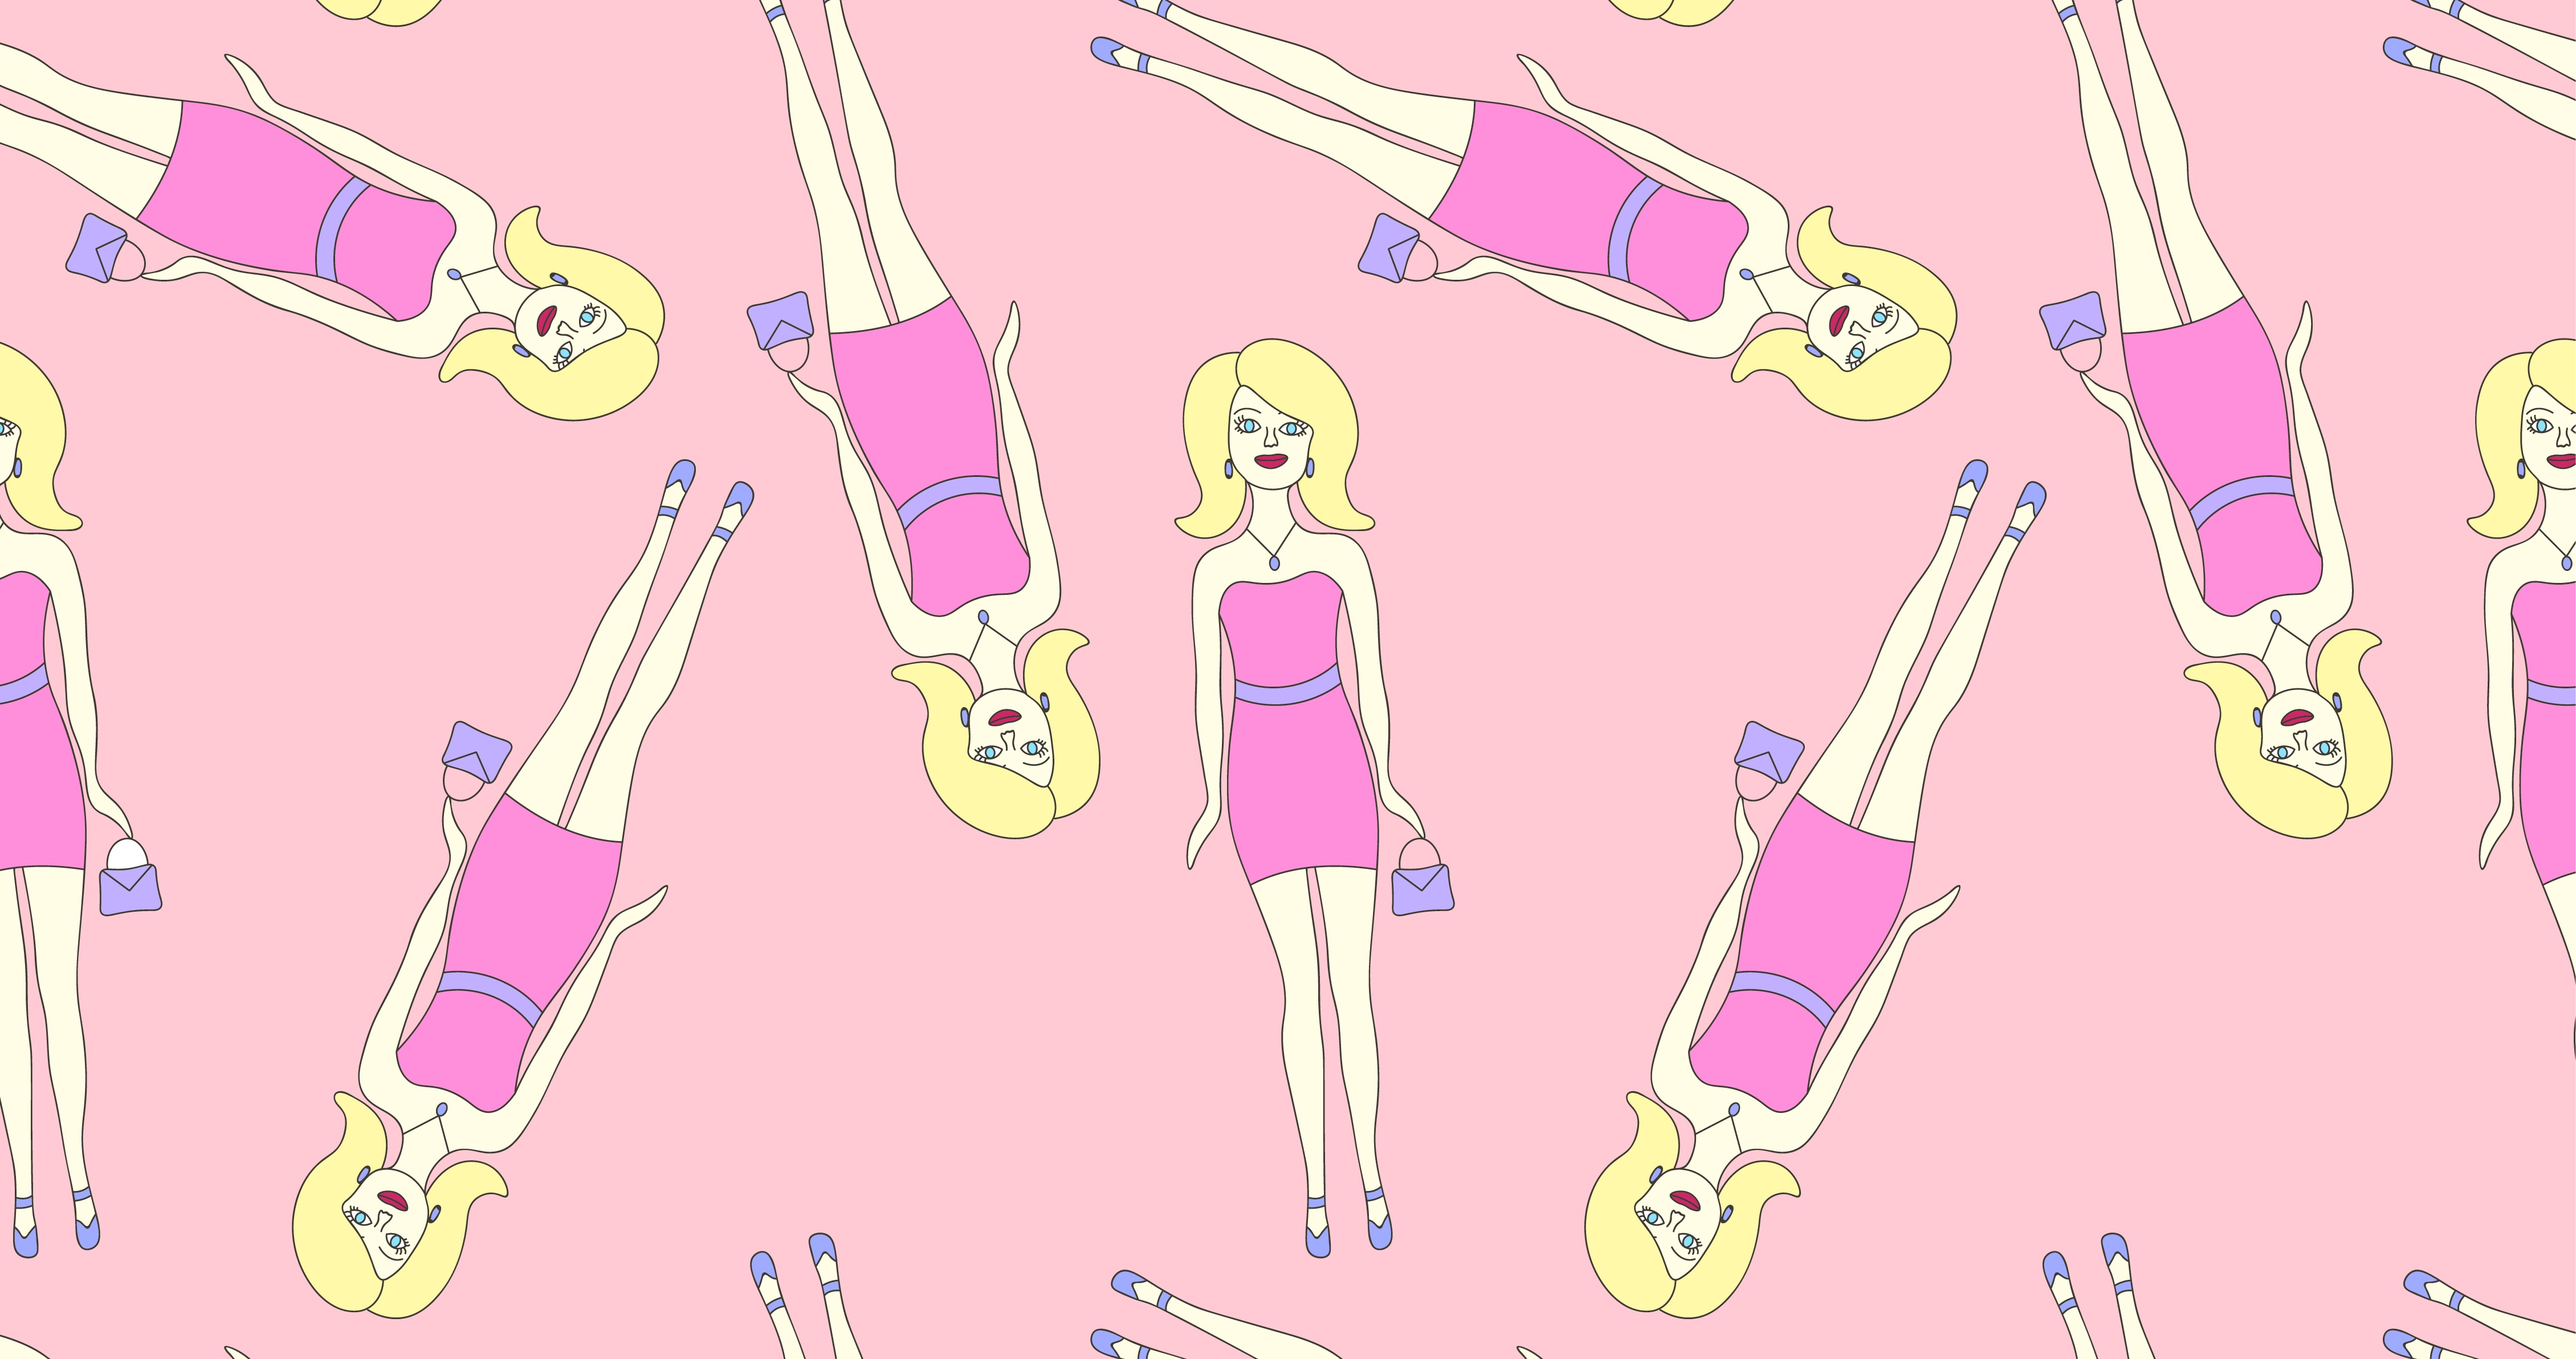 Illustrations of Barbie dolls